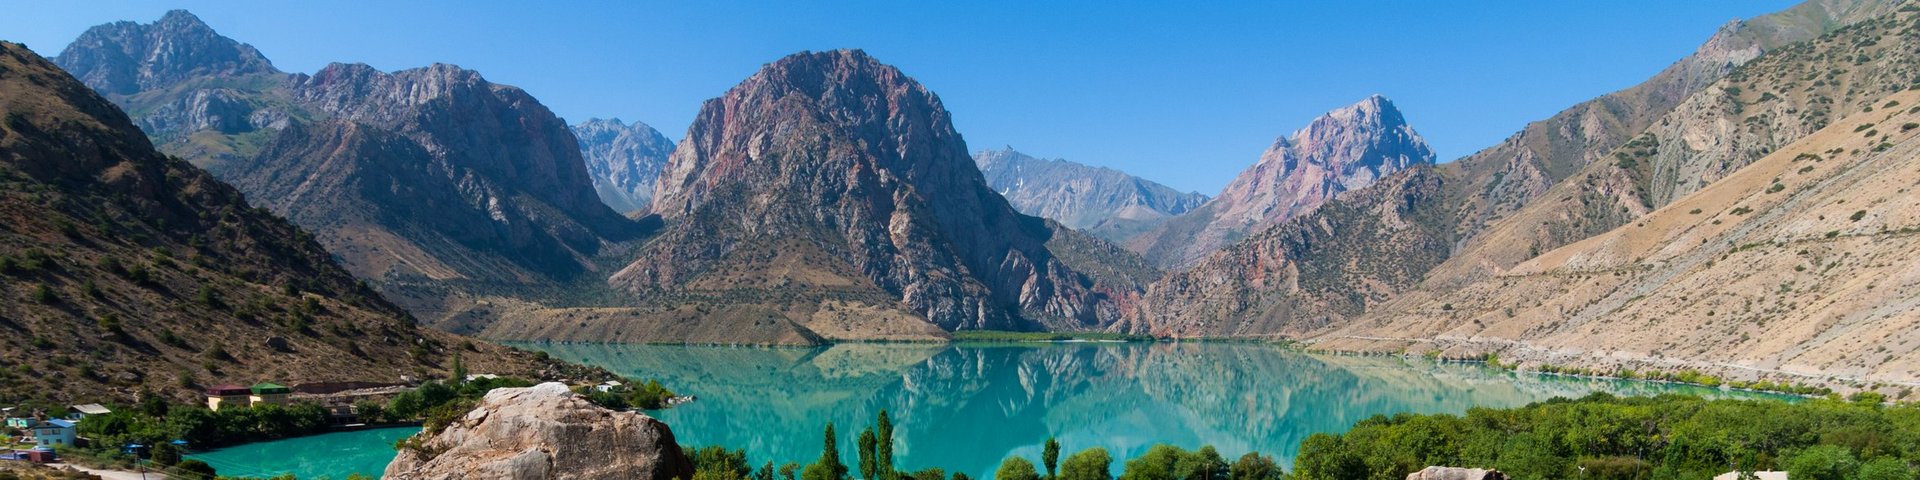 Iskander Kul - Bergsee in Tadschikistan